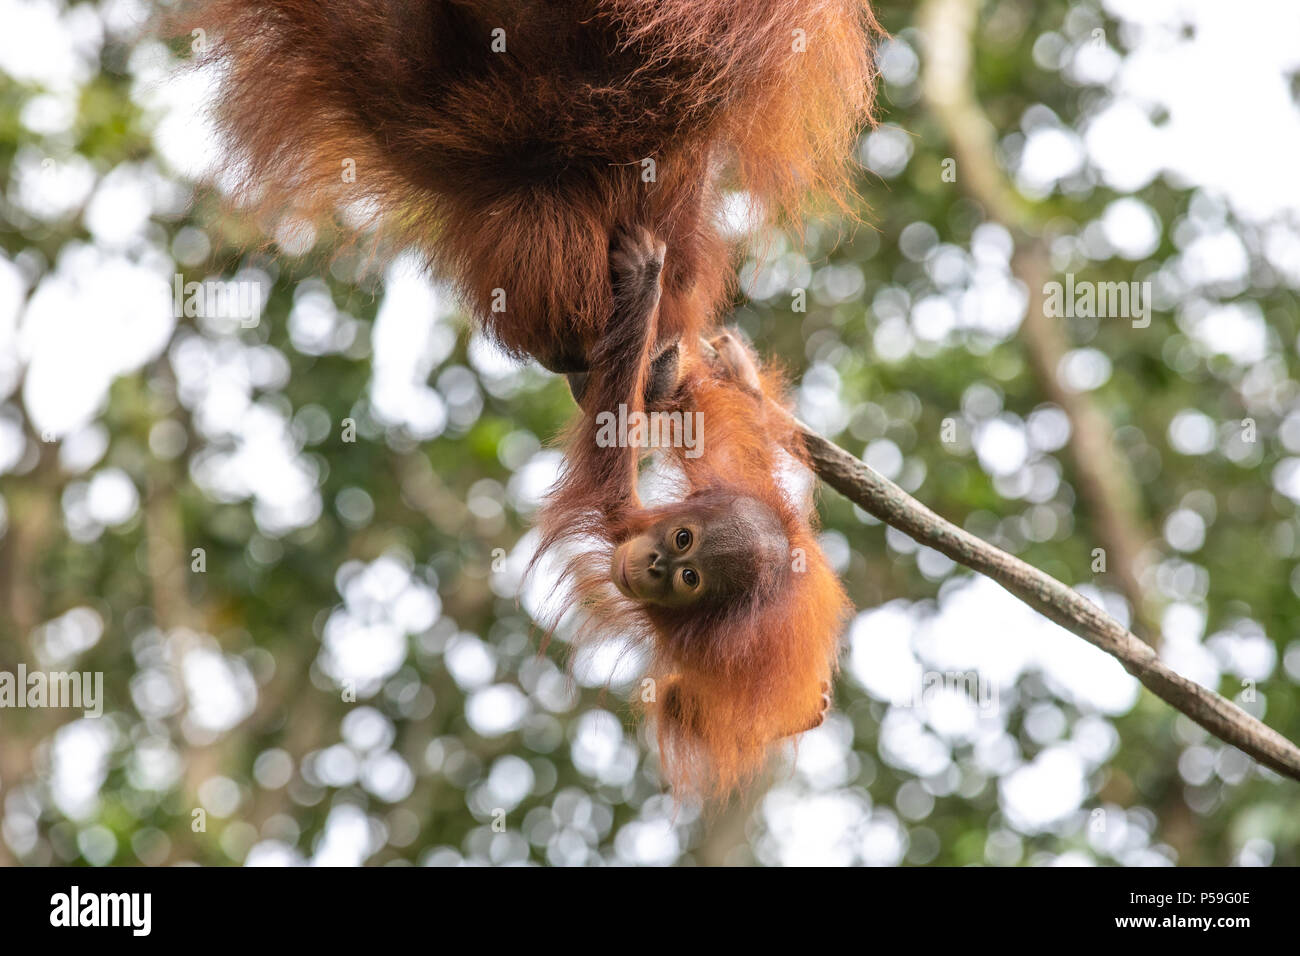 Portrait Of A Cute Baby Orangutan Orangutan Grabbing The Fur Of Her